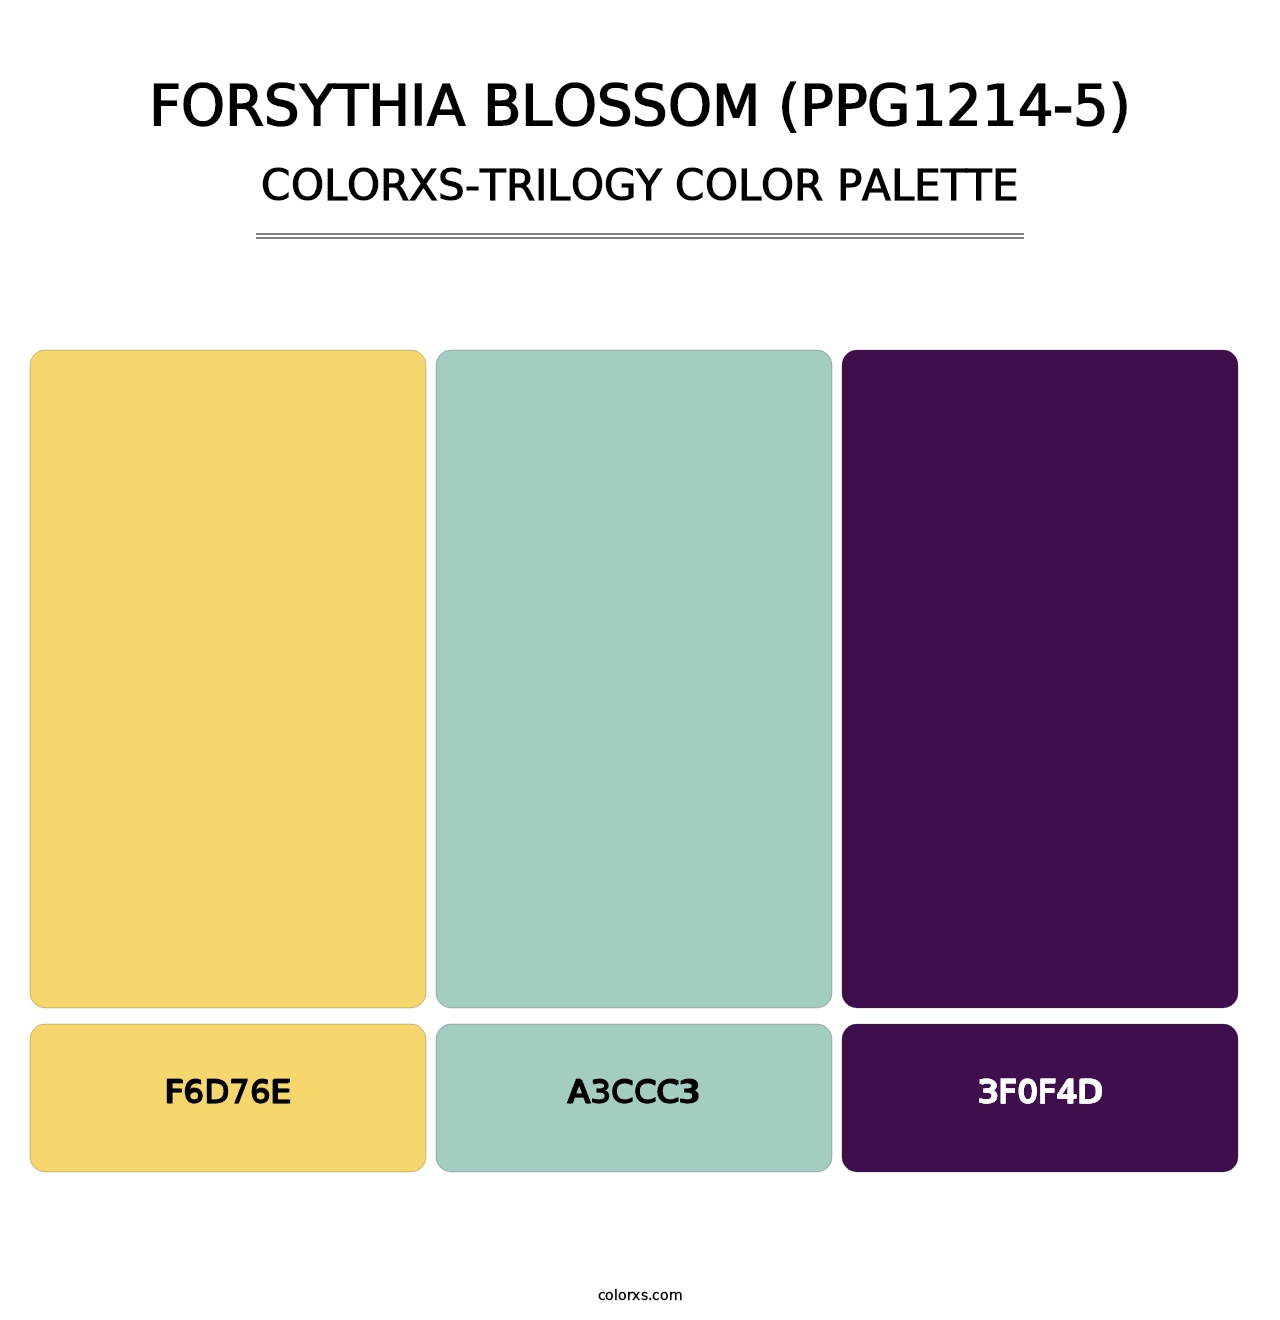 Forsythia Blossom (PPG1214-5) - Colorxs Trilogy Palette